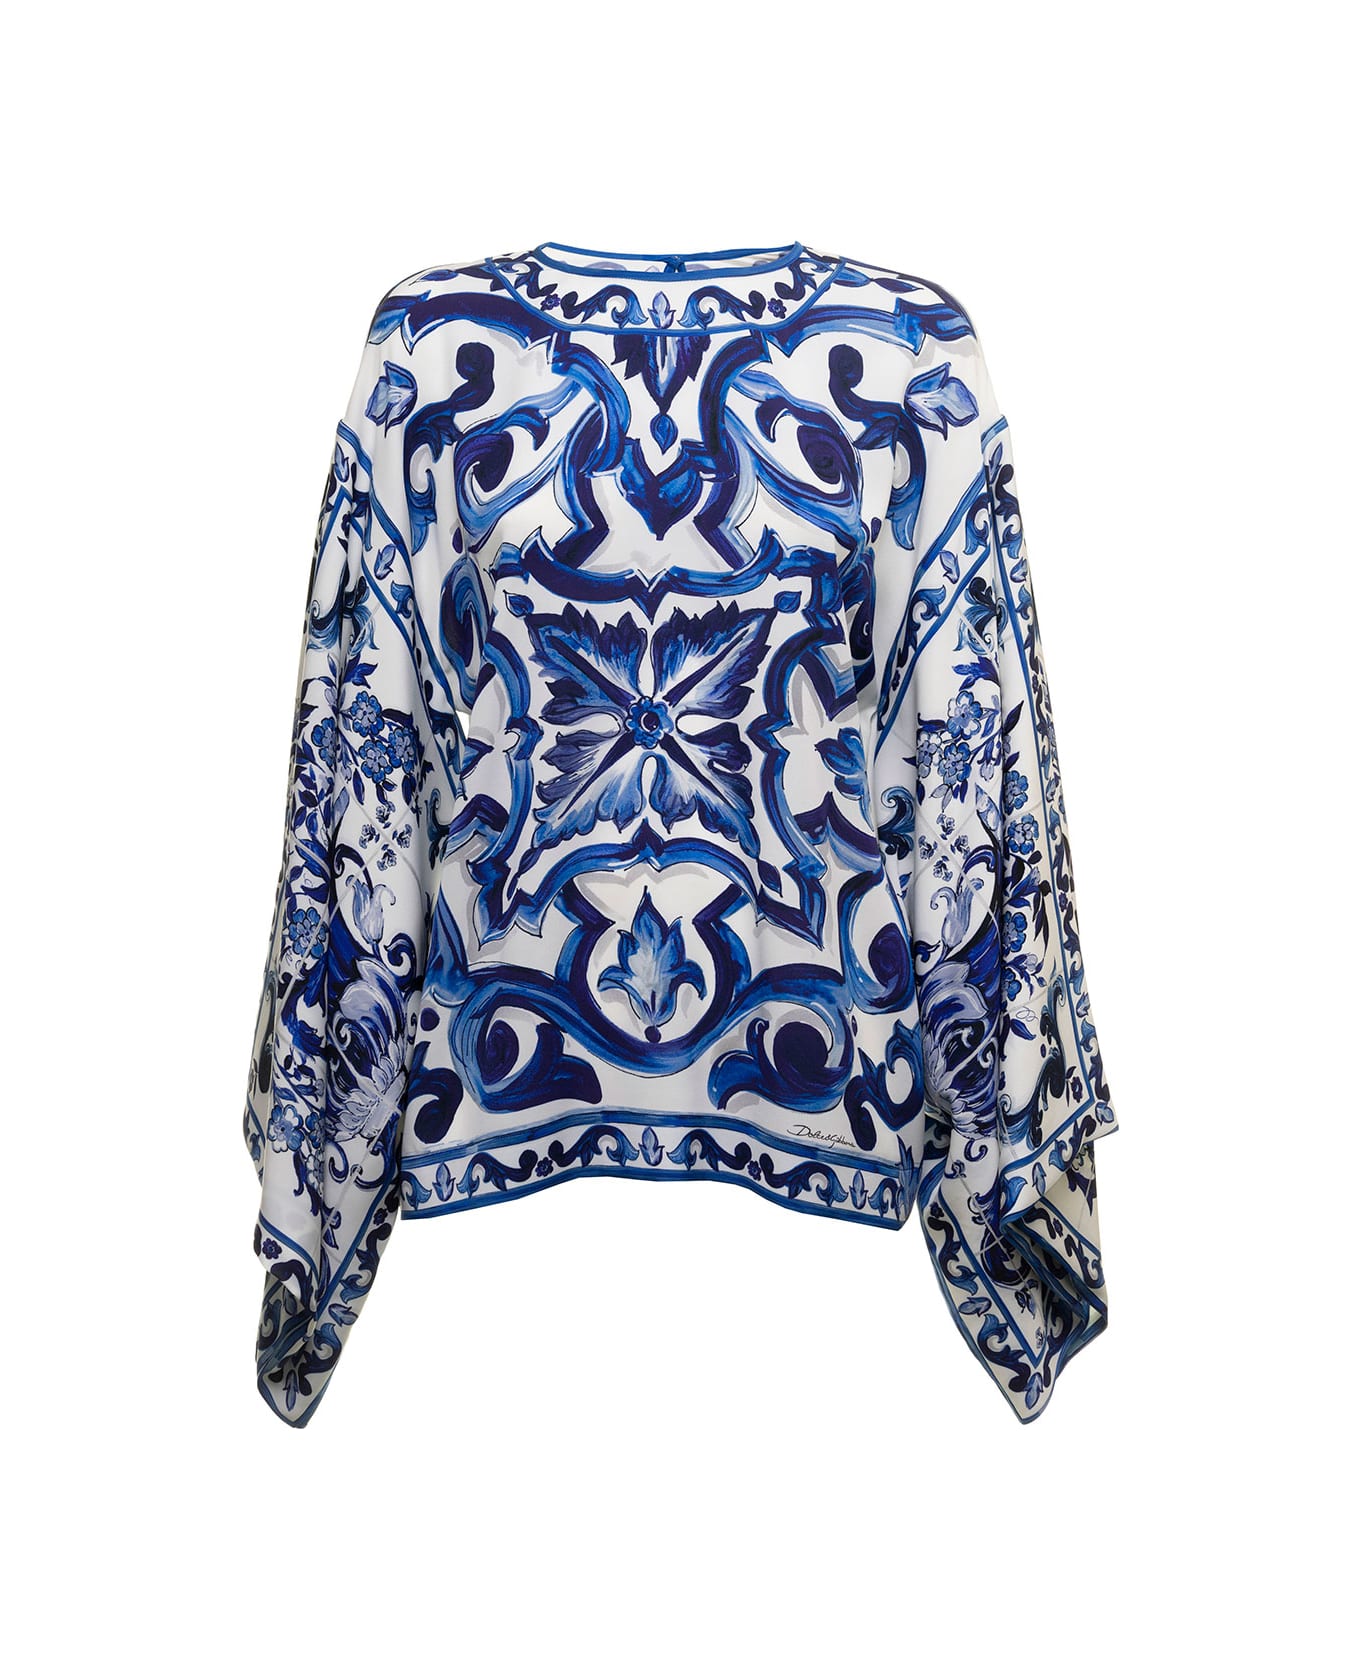 Dolce & Gabbana Woman's Maiolica Printed Silk Shirt Blouse - Tn Blu/bco ブラウス